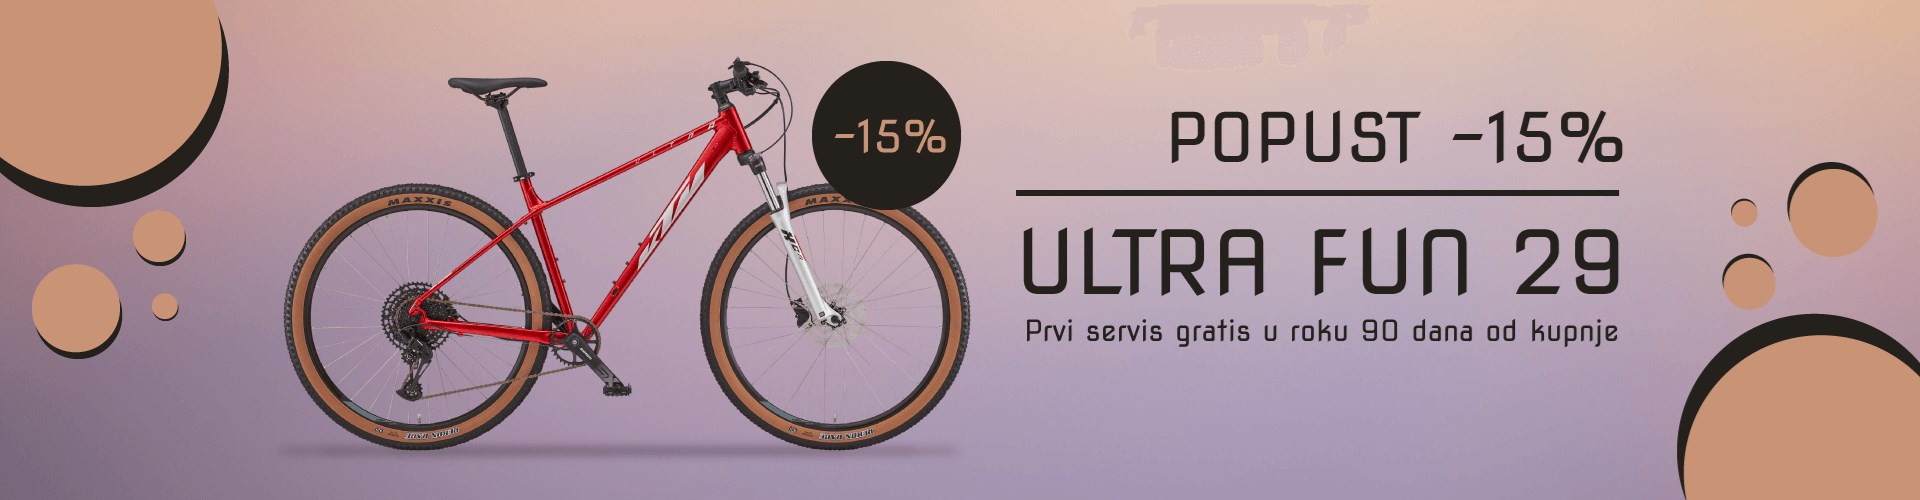 Bike-ultraFun